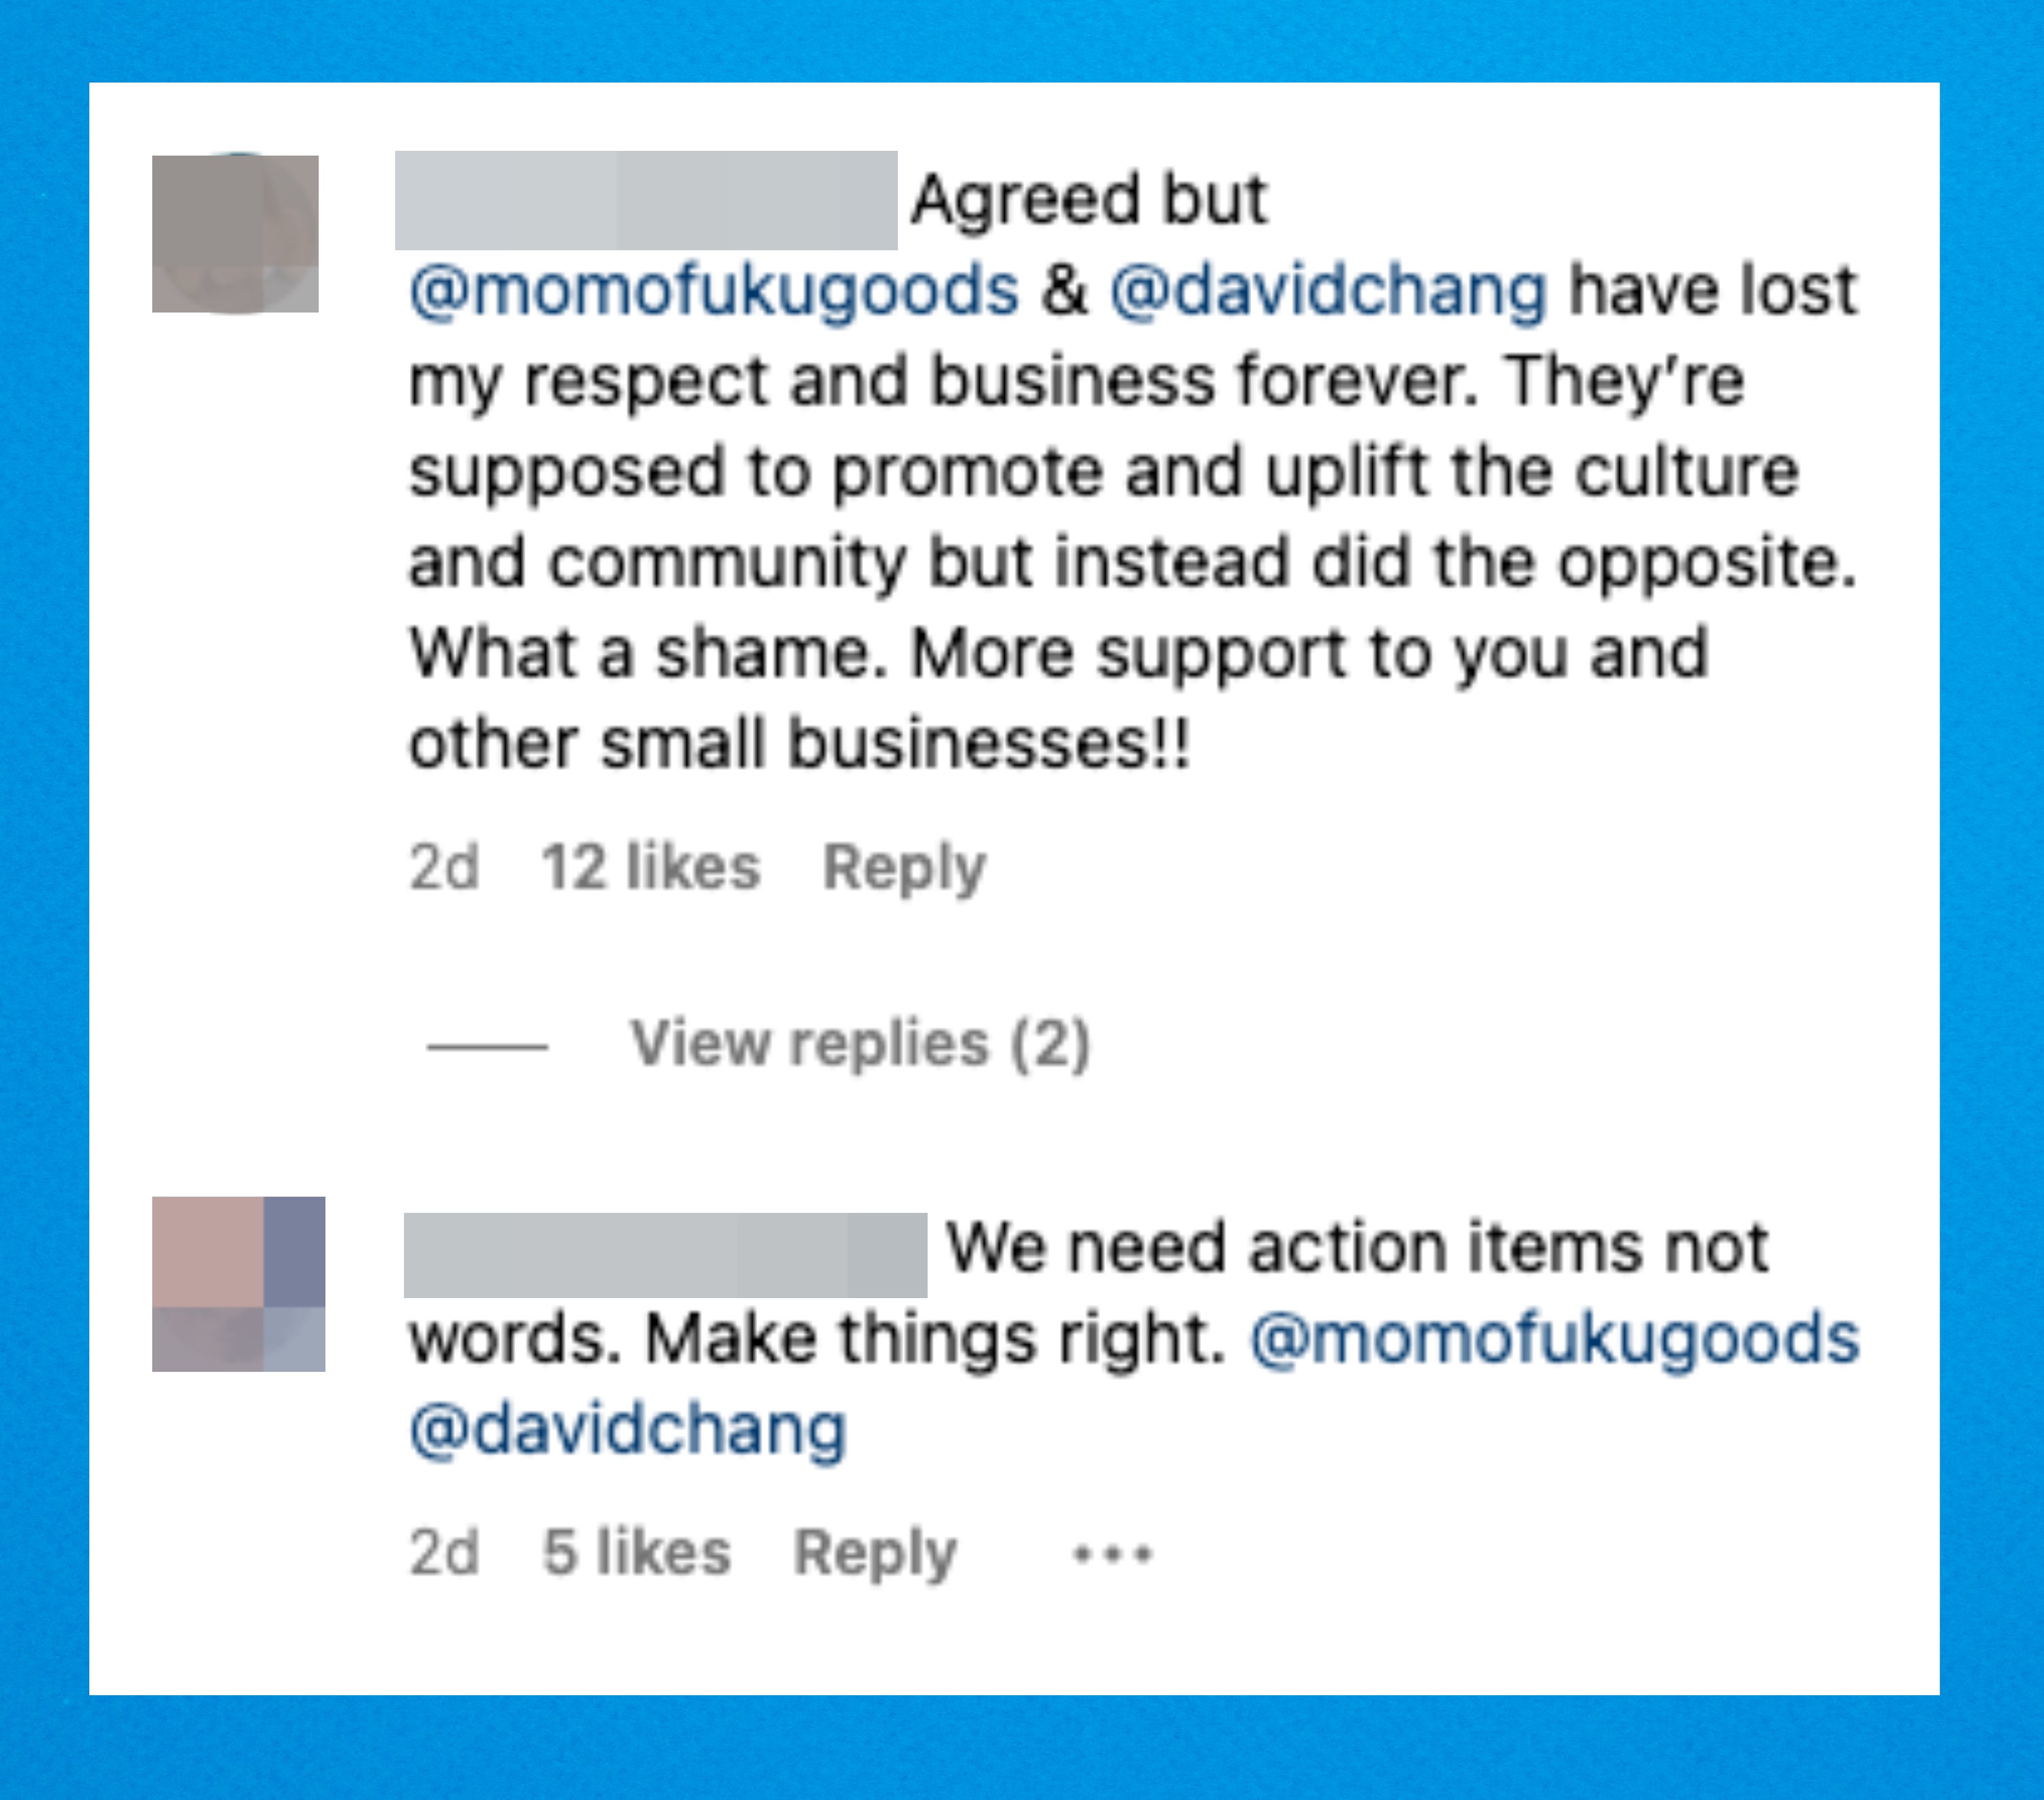 Two social media comments criticizing David Chang and Momofuku brand